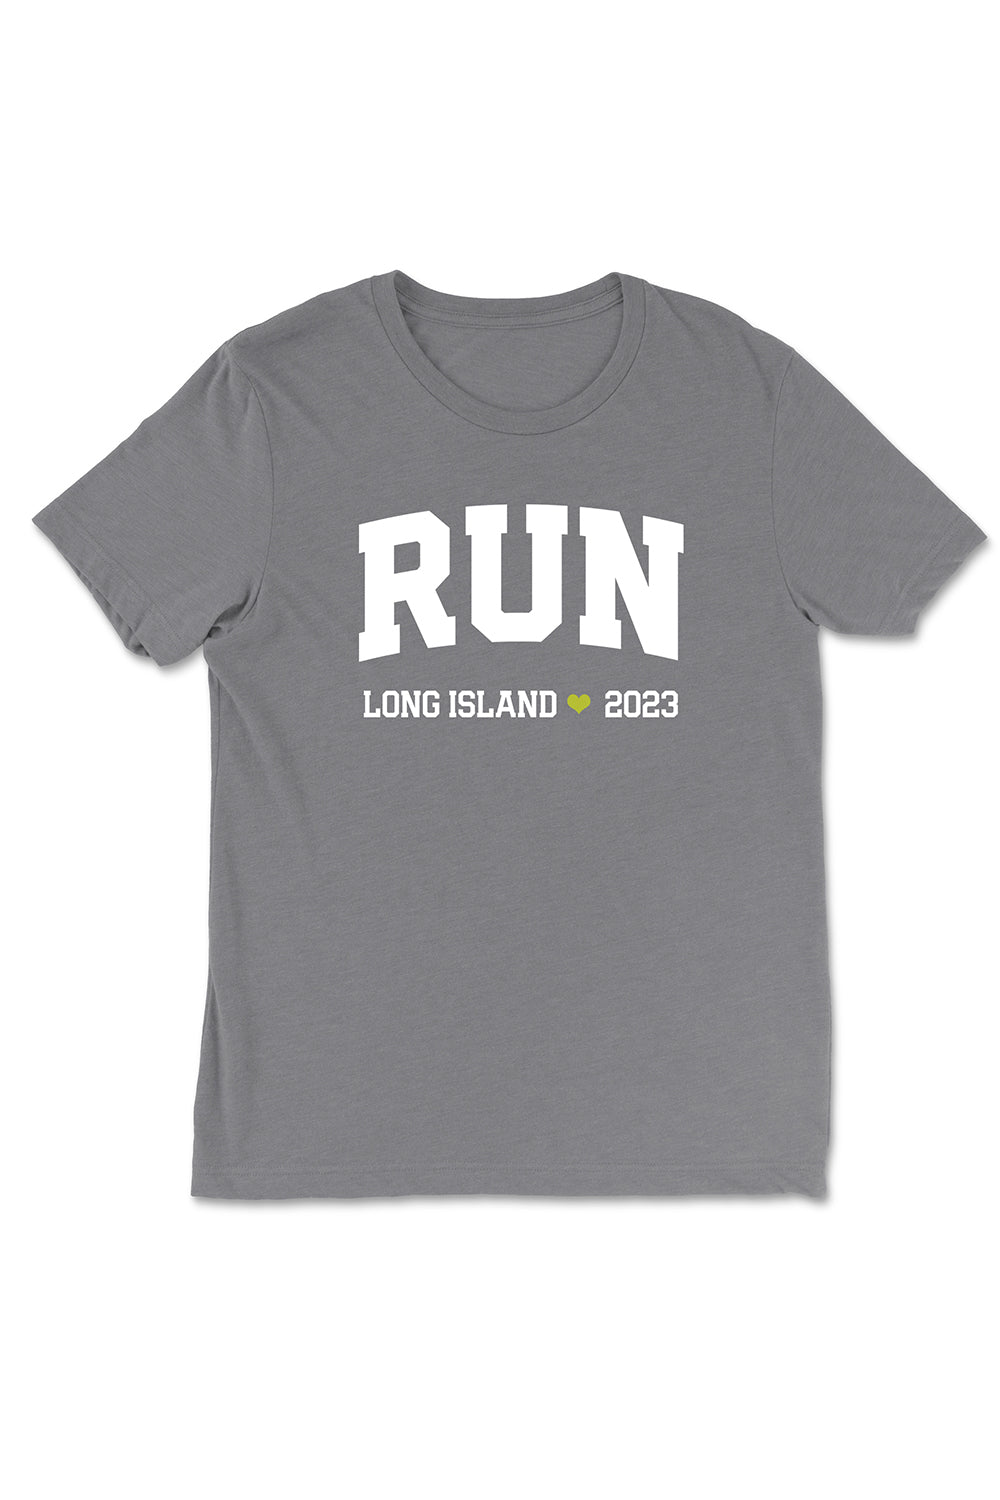 RUN Long Island T-Shirt